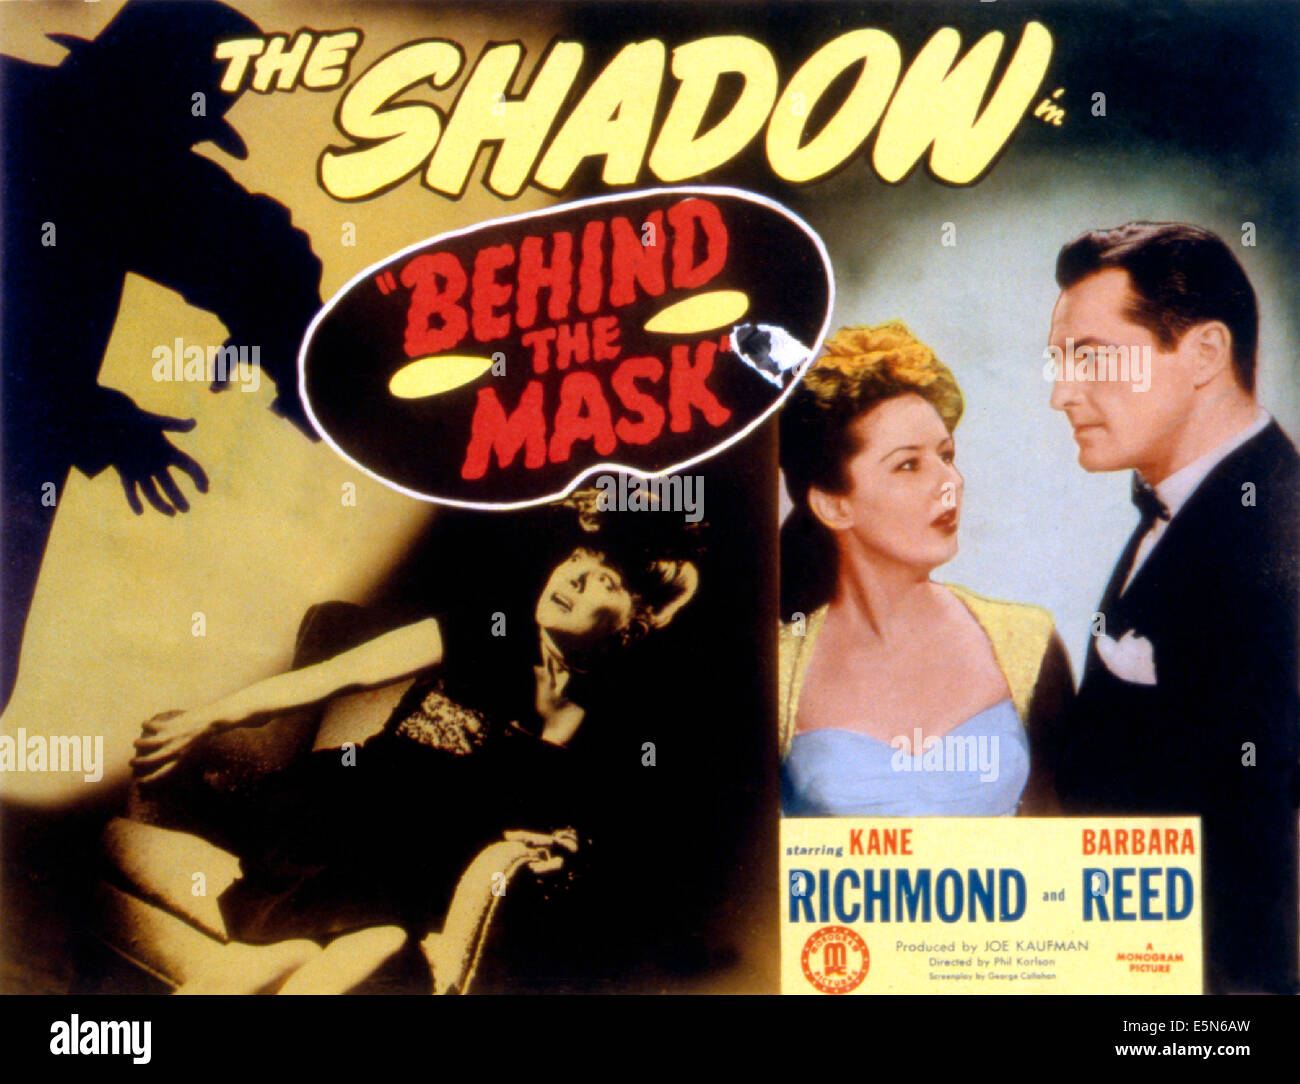 BEHIND THE MASK, Kane Richmond, Barbara Reed, Poster Art, 1946 Stock Photo